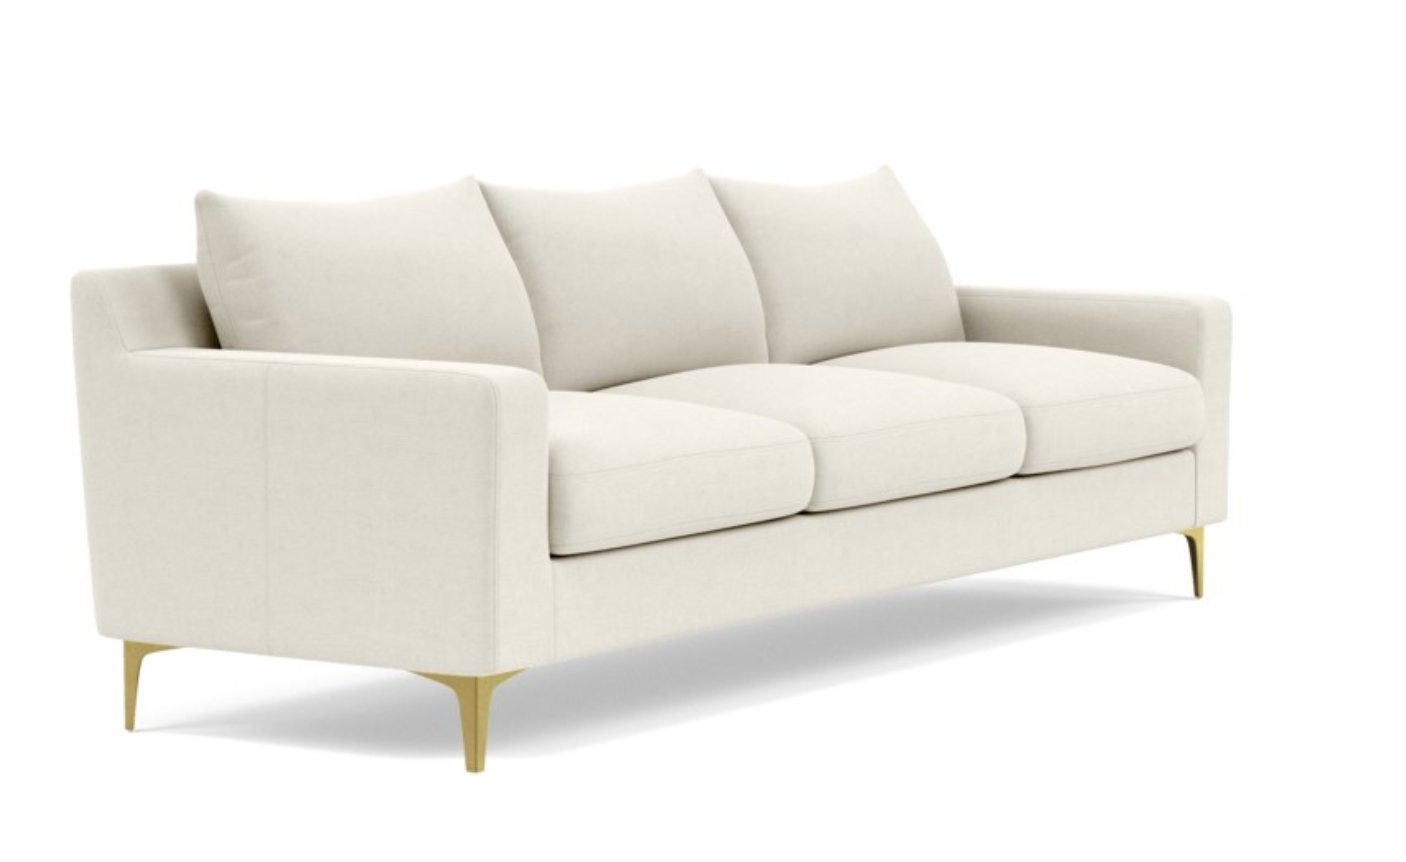 SLOAN 3-Seat Sofa - Image 1